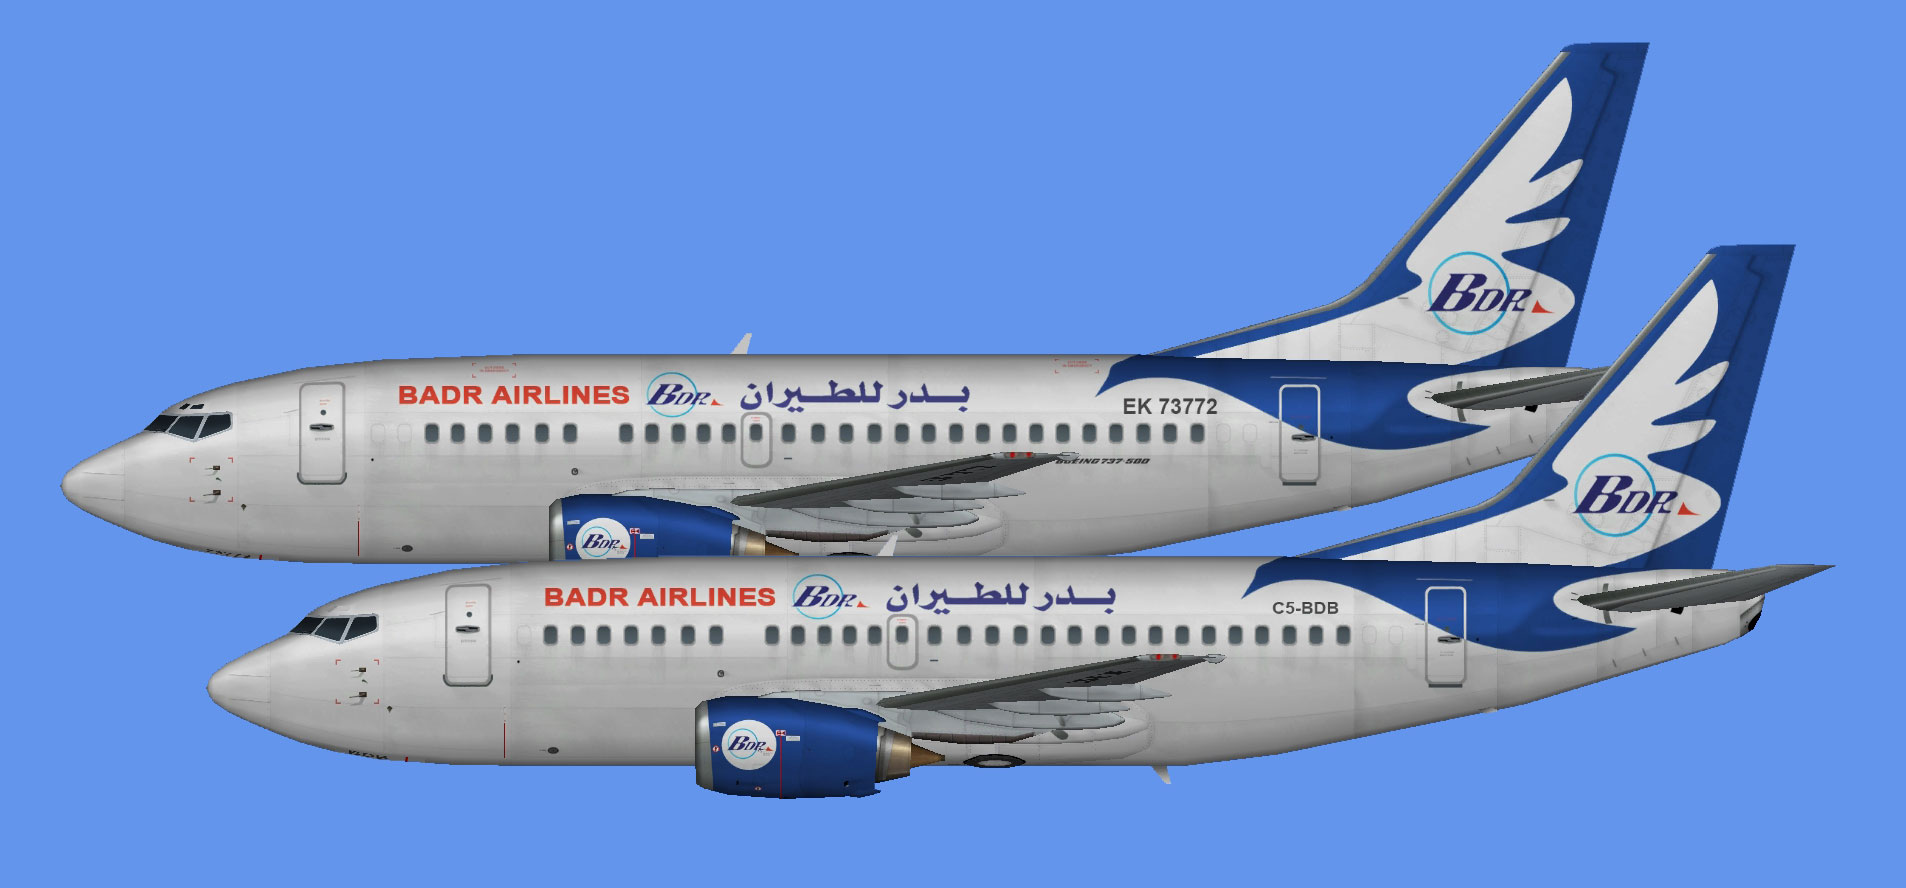 Badr Airlines Boeing 737-500